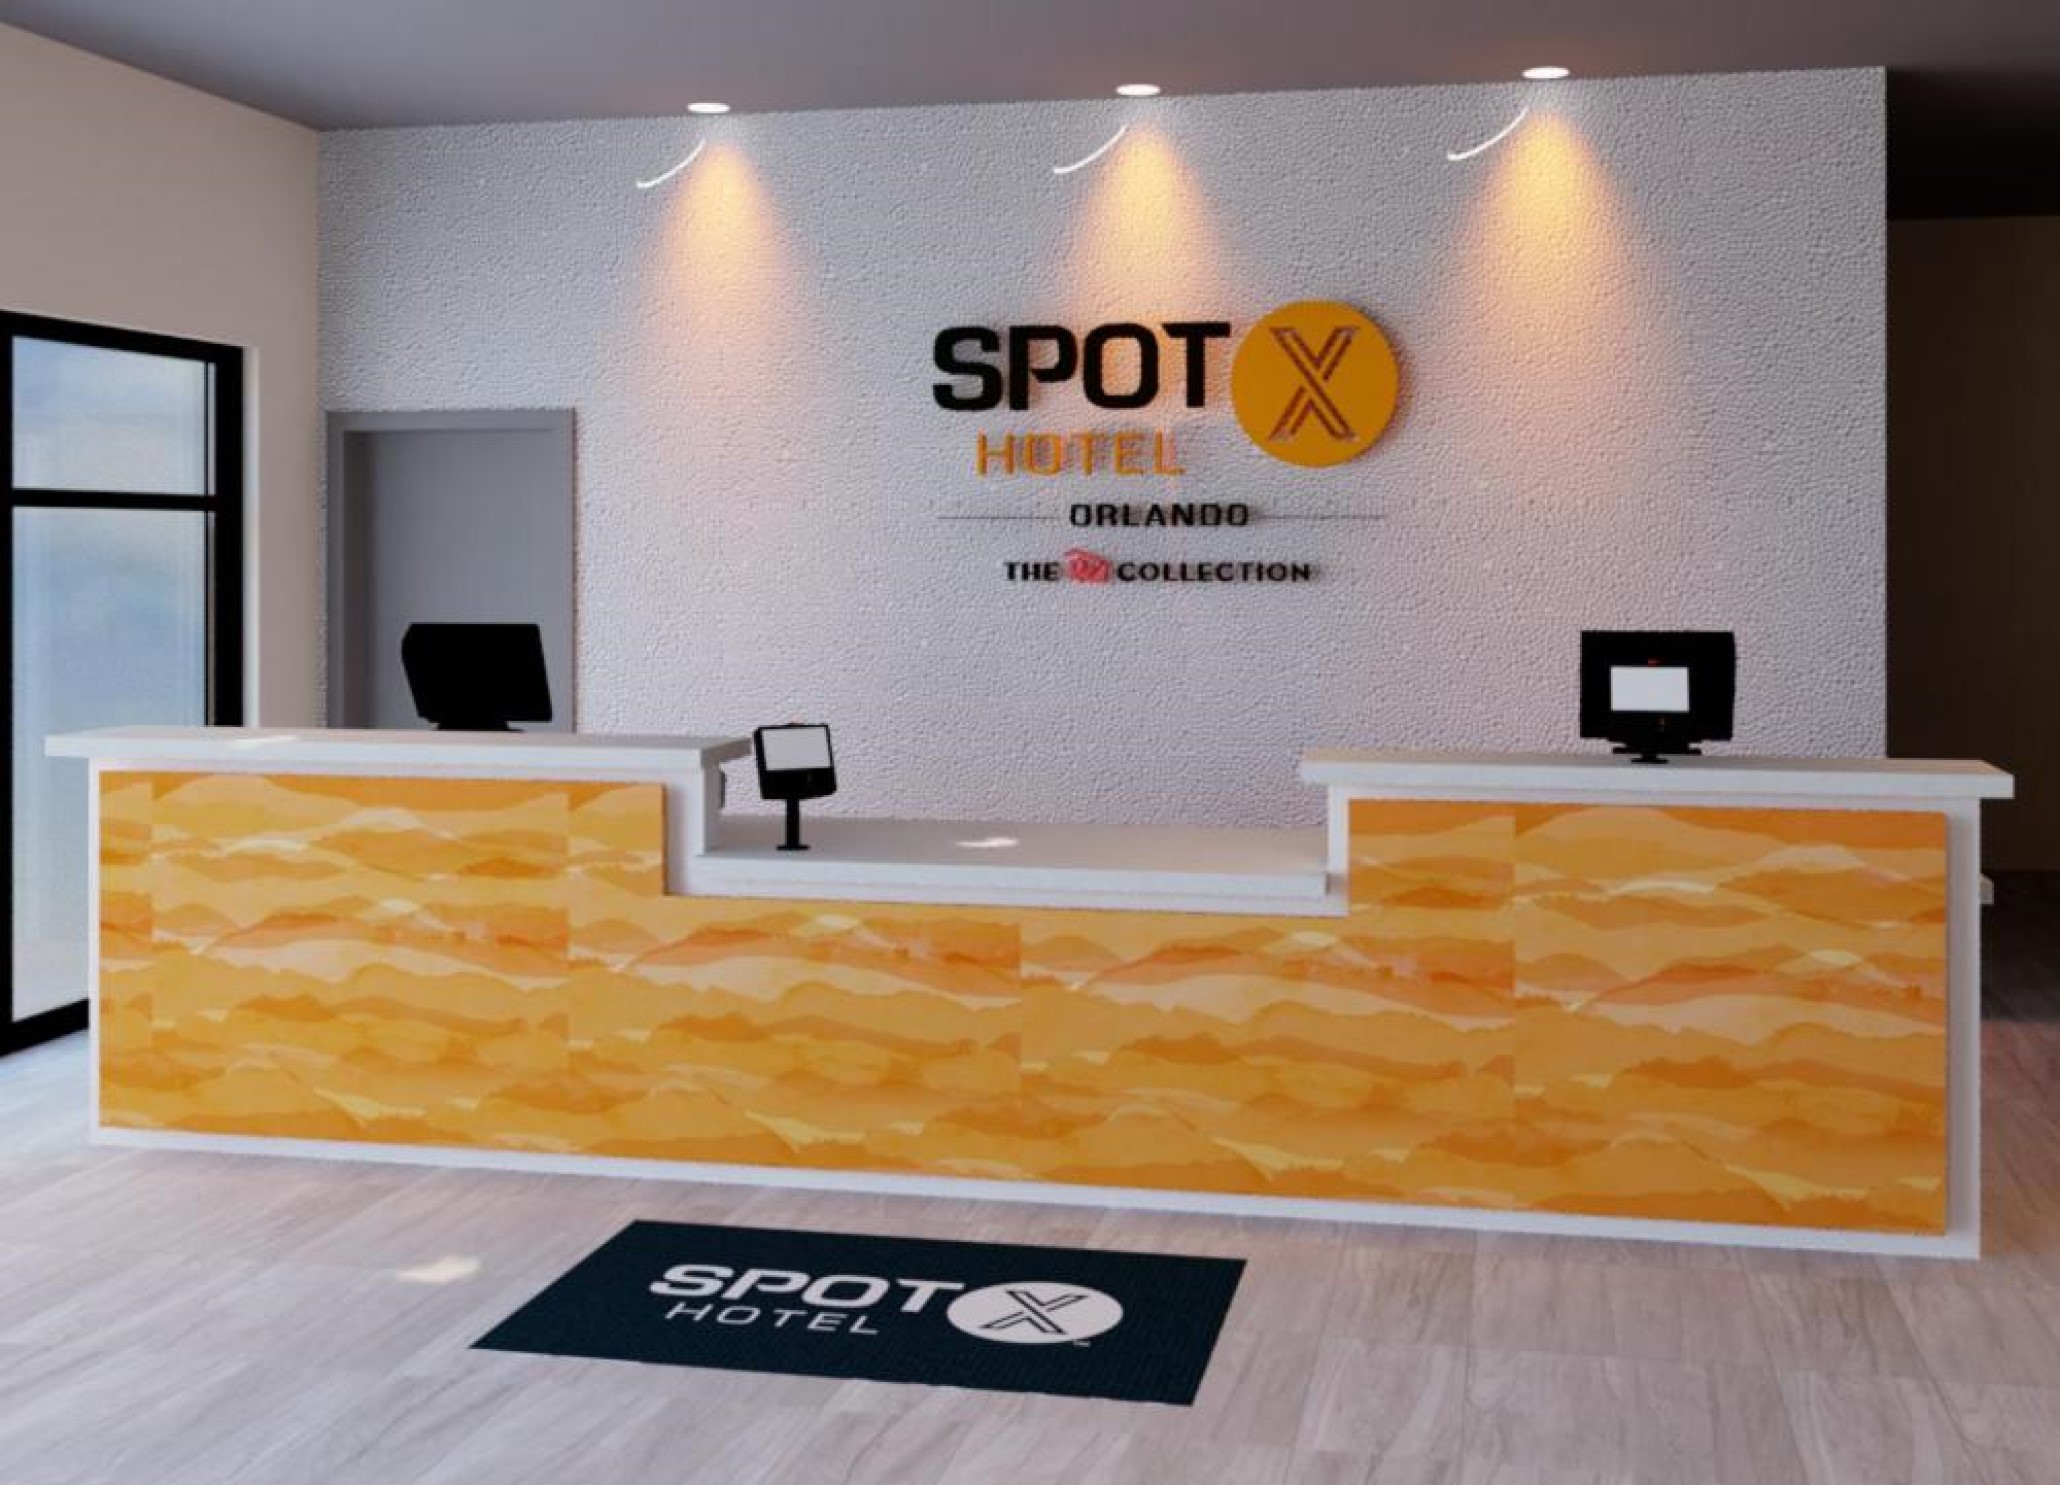 Spot X Hotel - Orlando